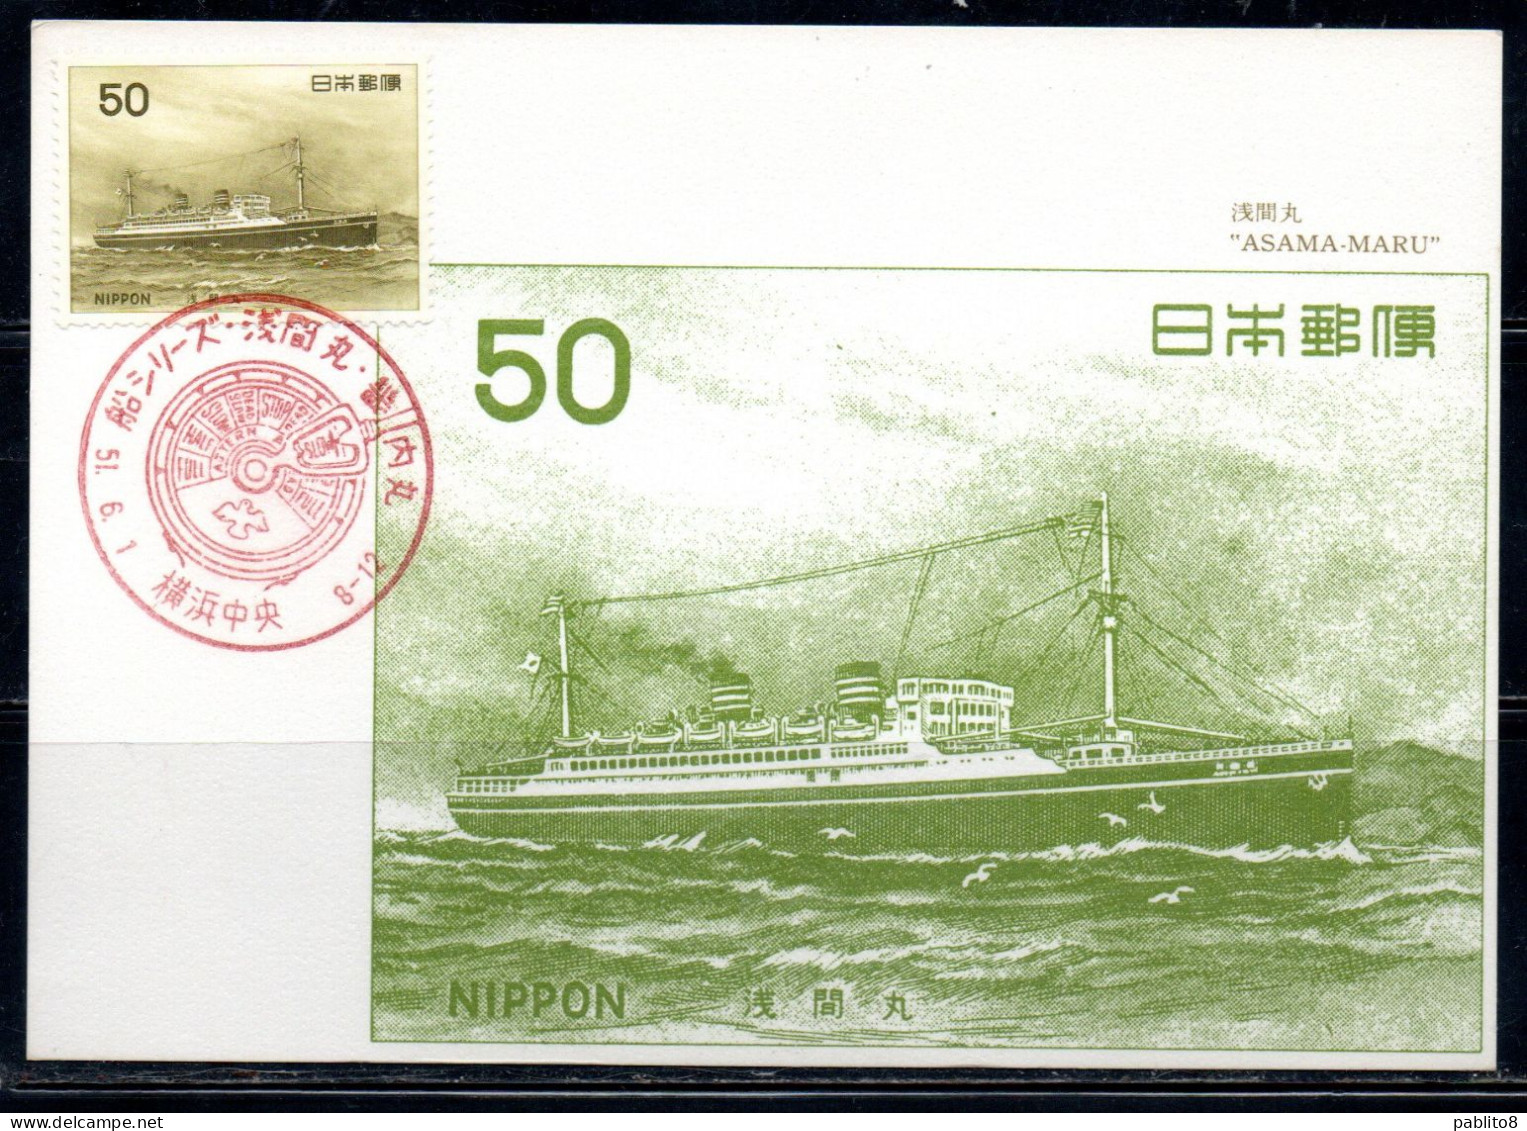 JAPAN GIAPPONE 1975 1976 HISTORIC SHIPS ISSUE ASAMA-MARU SHIP 50y MAXI MAXIMUM CARD - Maximumkarten